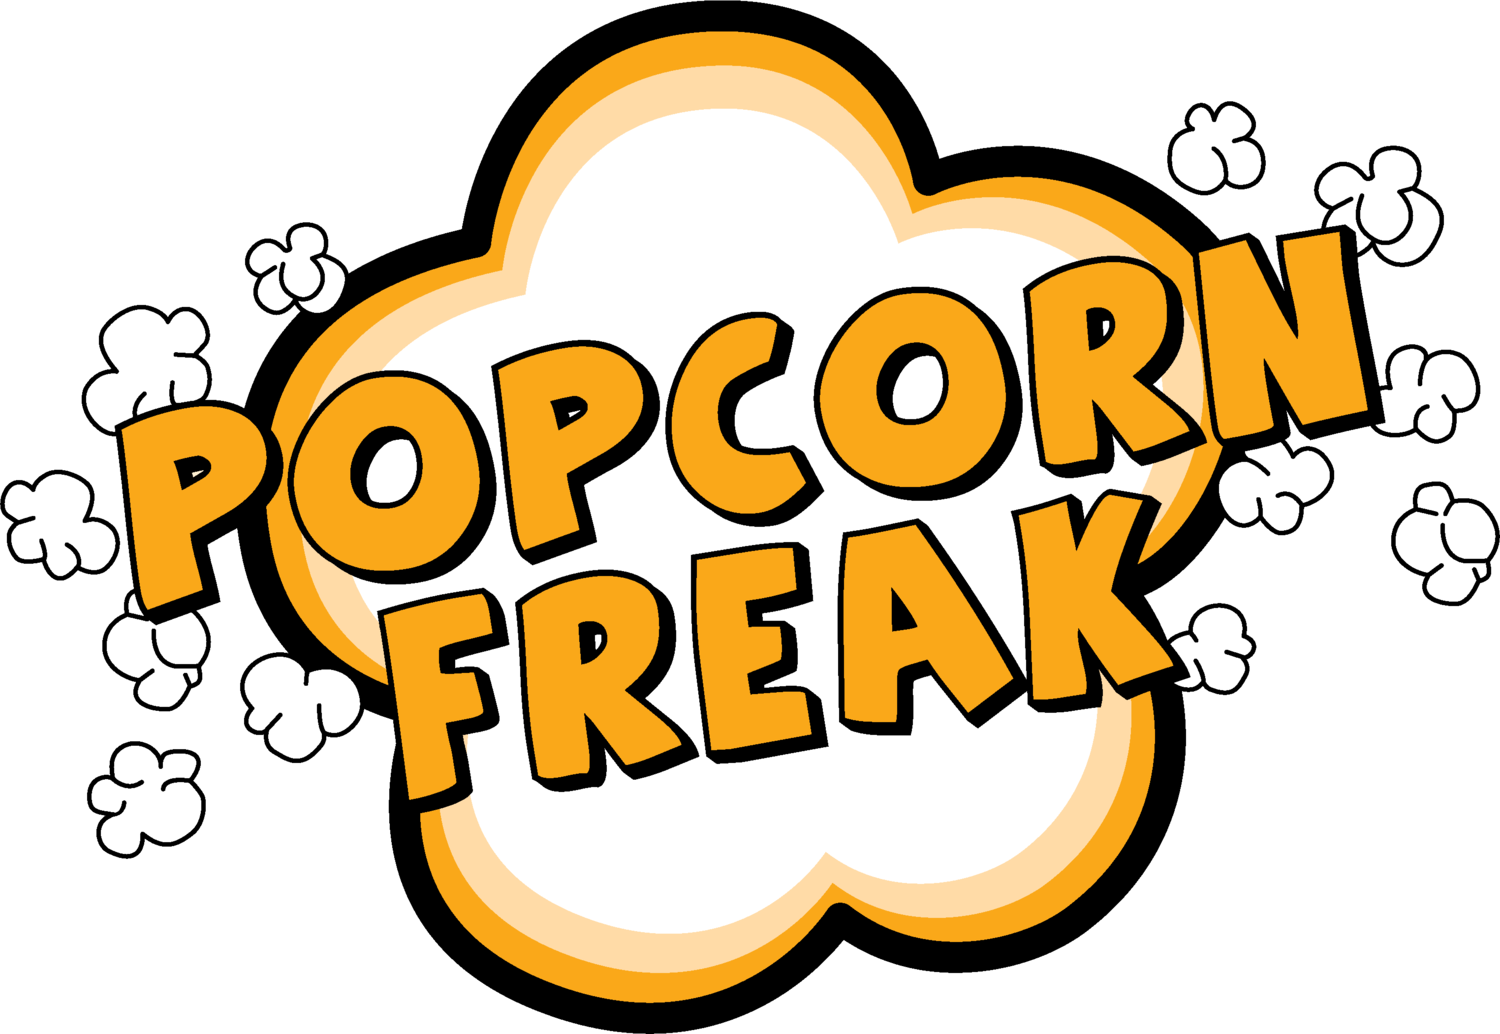 Popcorn Freak